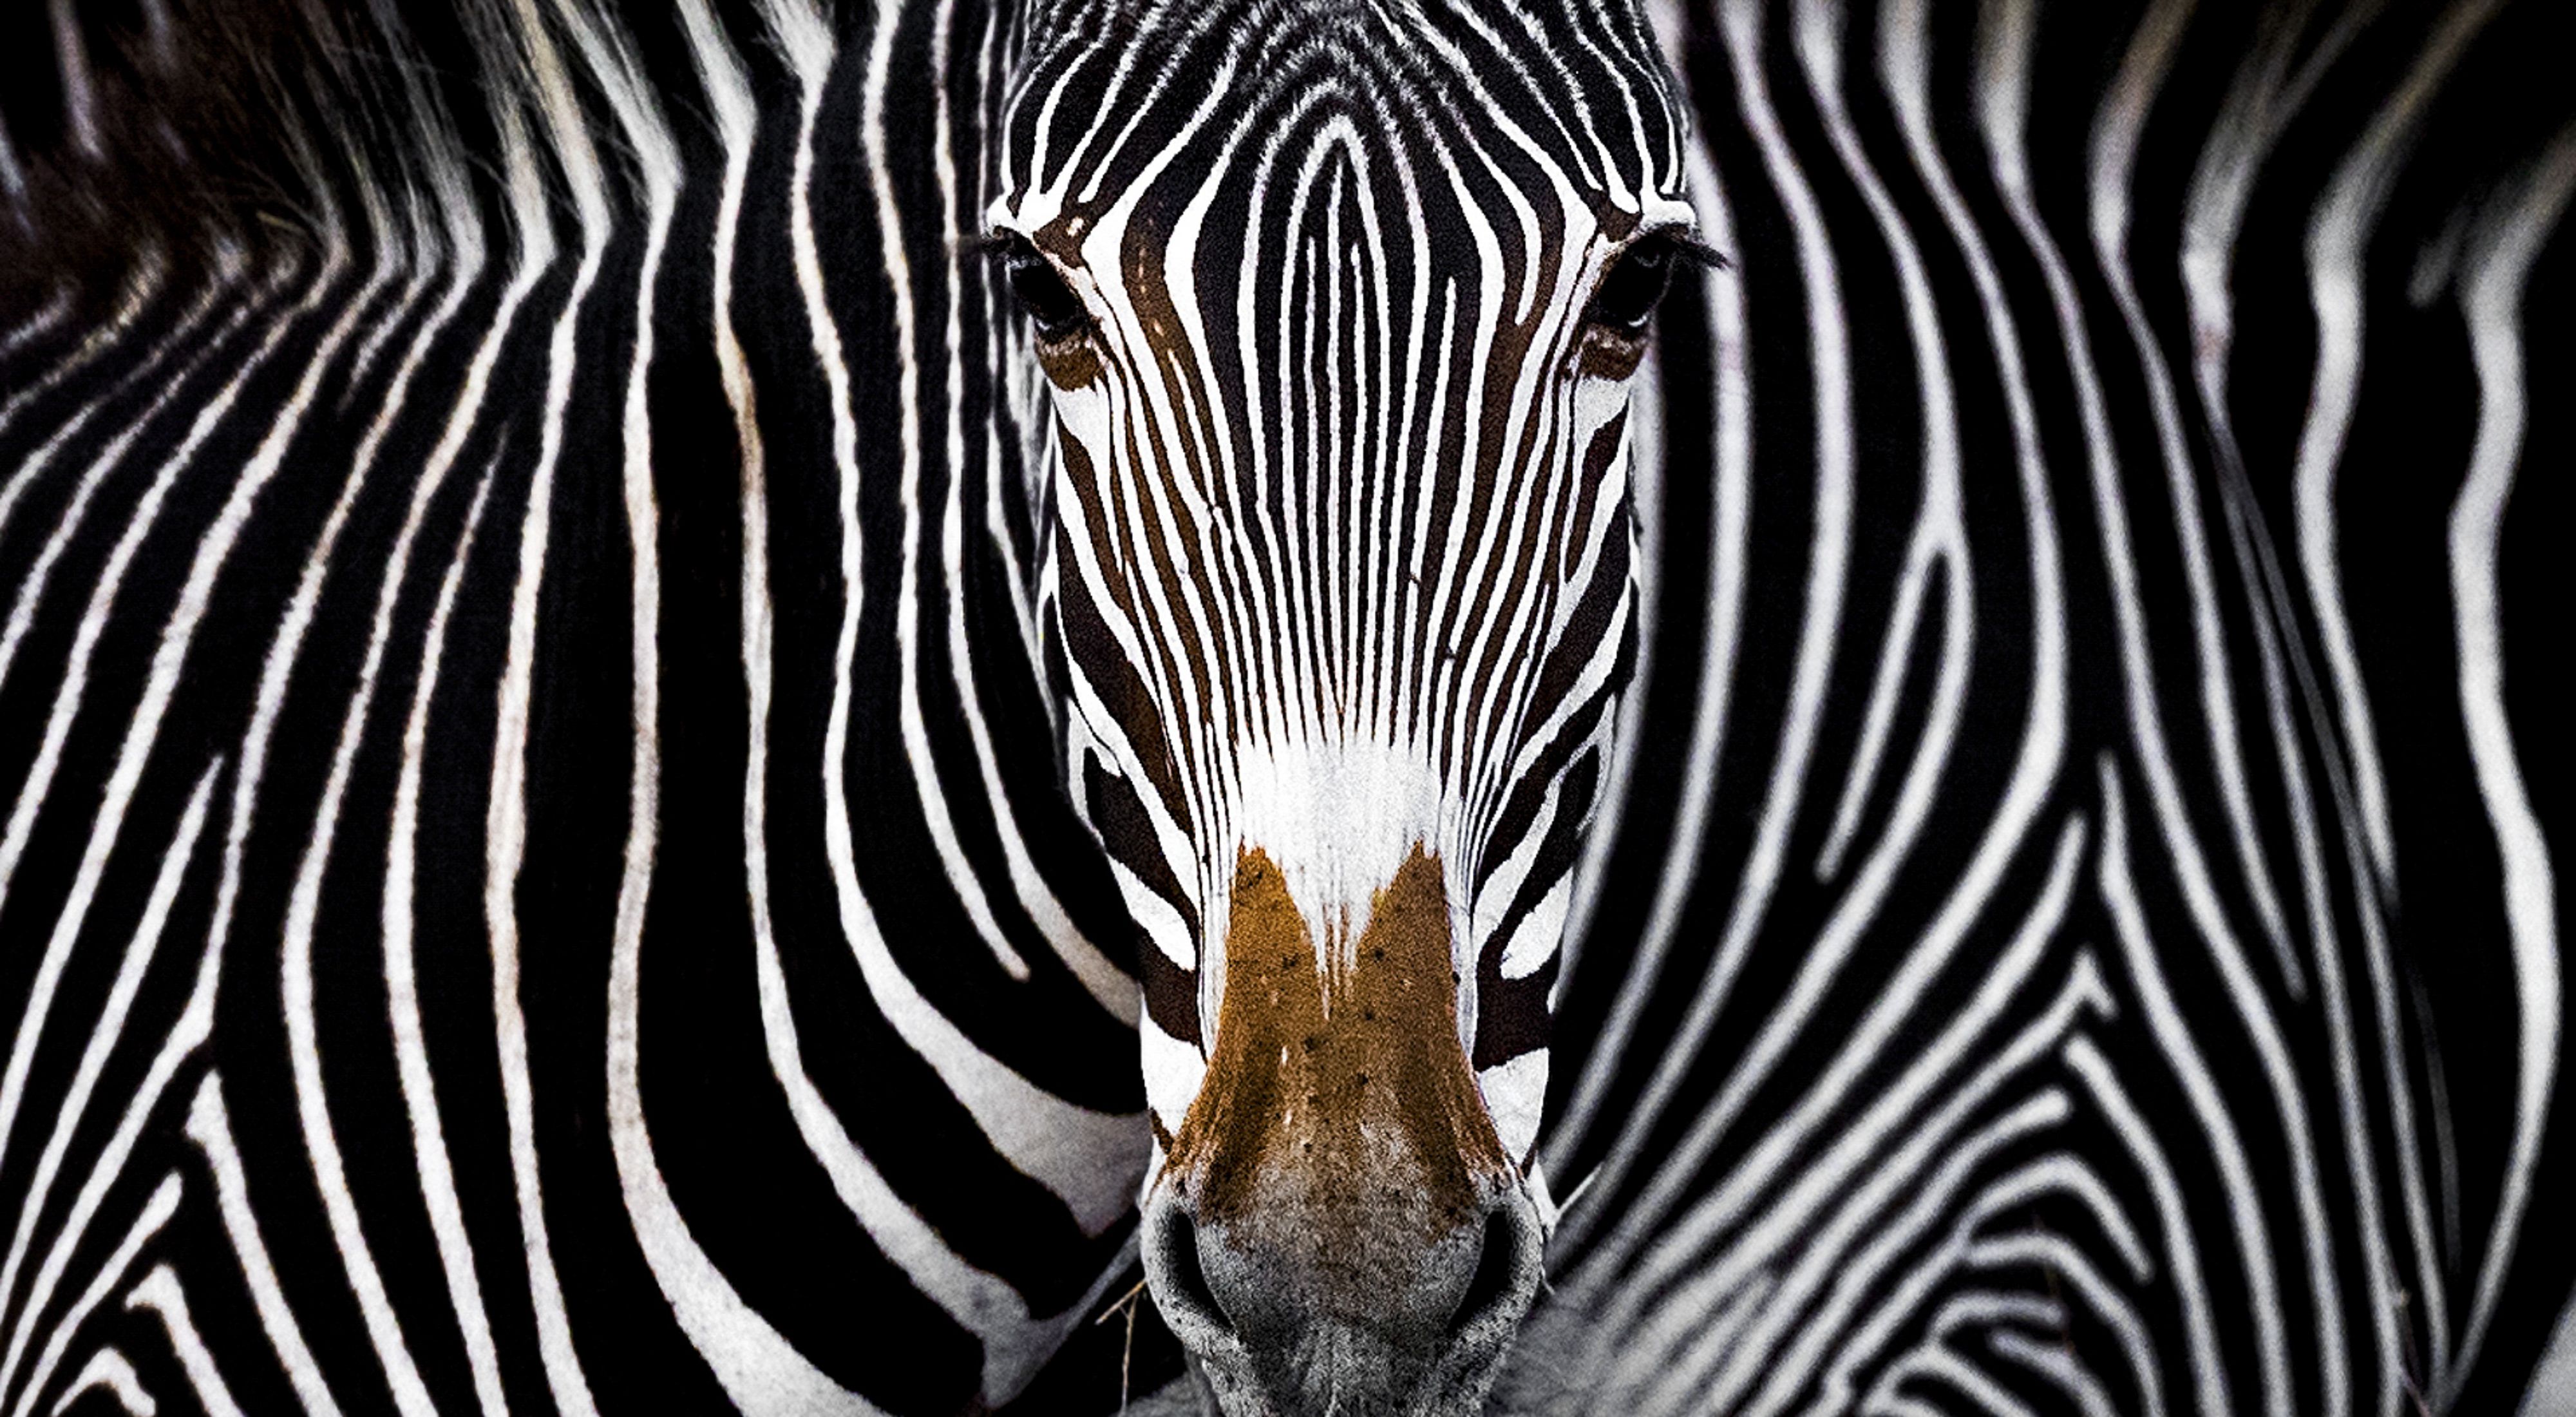 A Grevy's zebra staring at the camera in Lewa, Kenya.